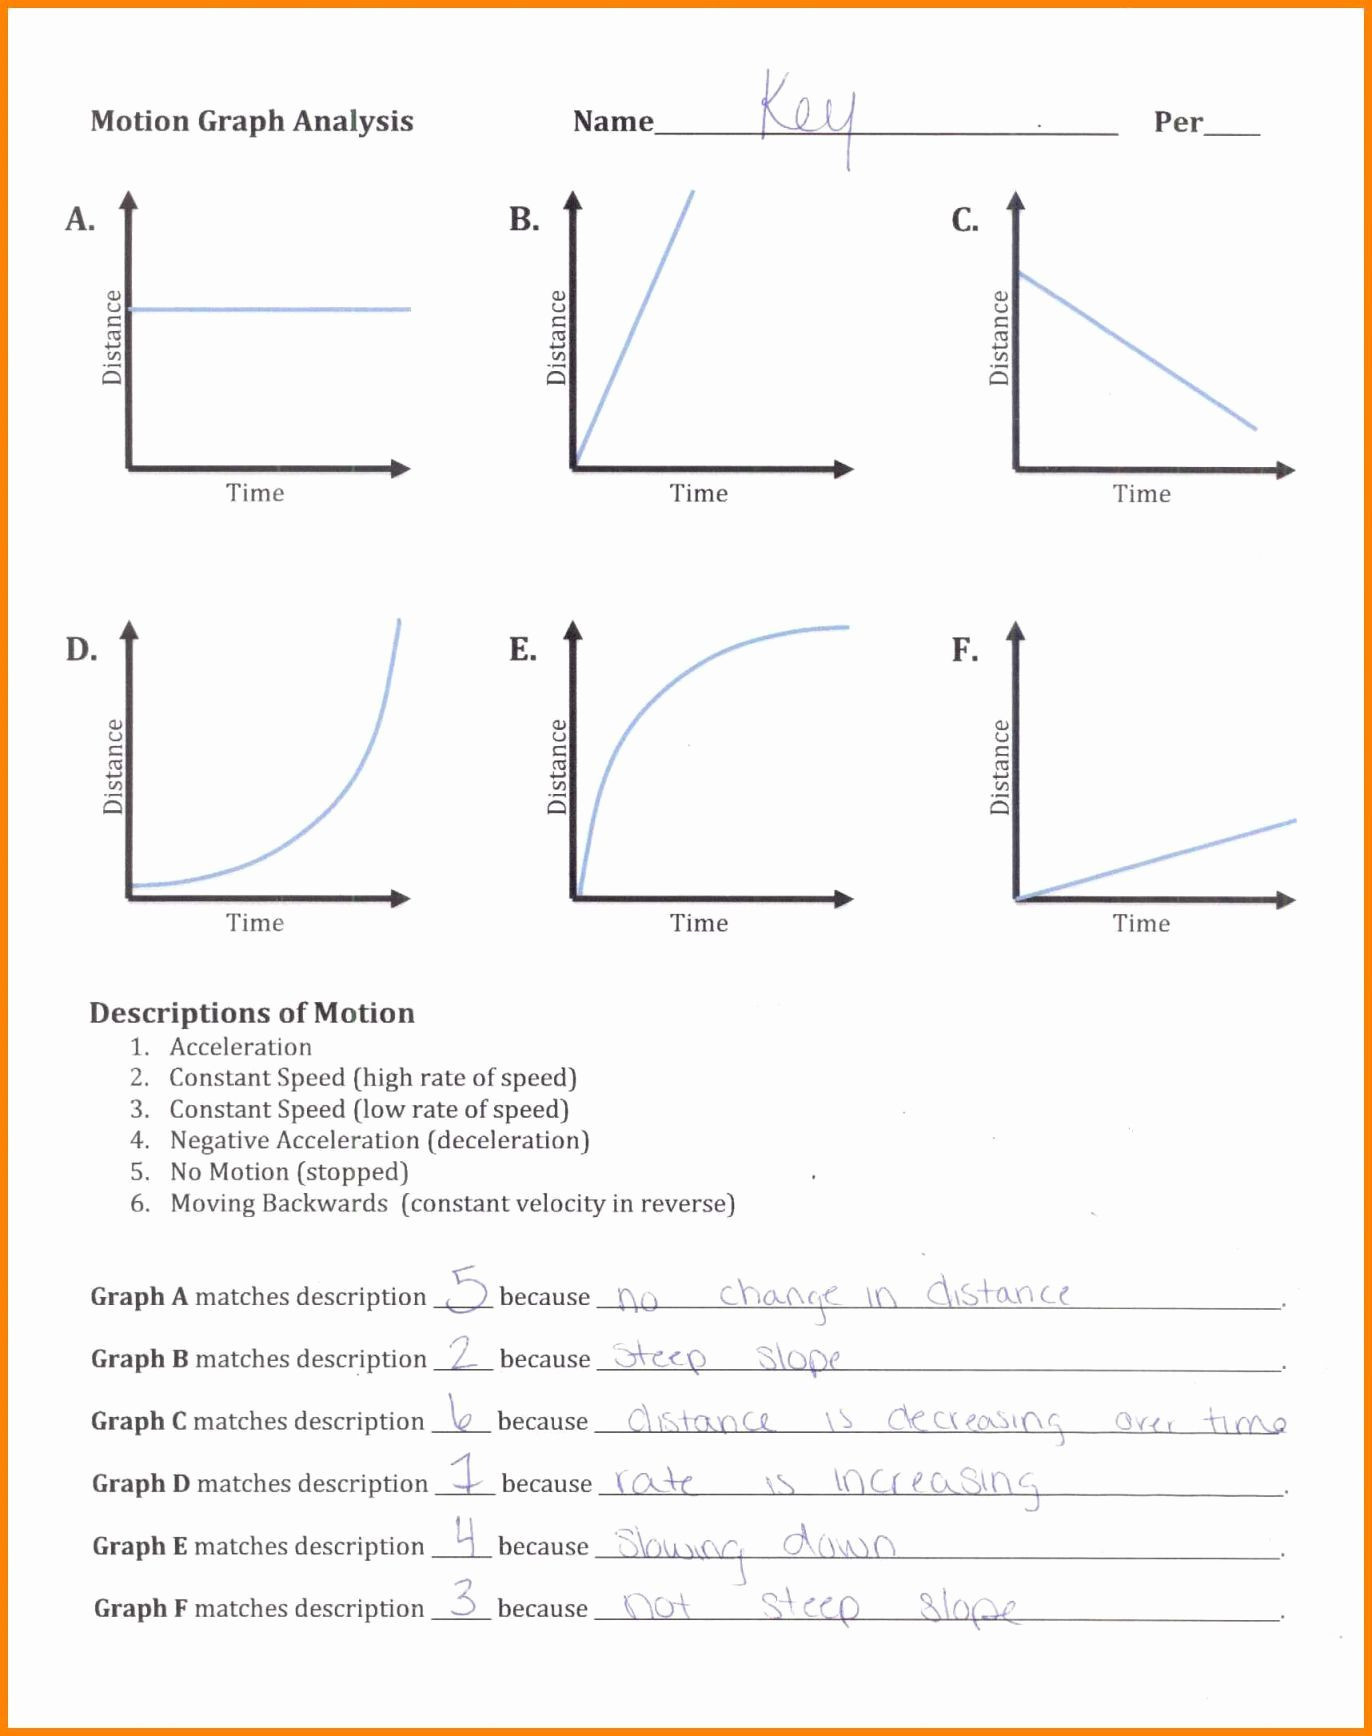 Motion Graphs Worksheet Answers Motion Graphysis Worksheet